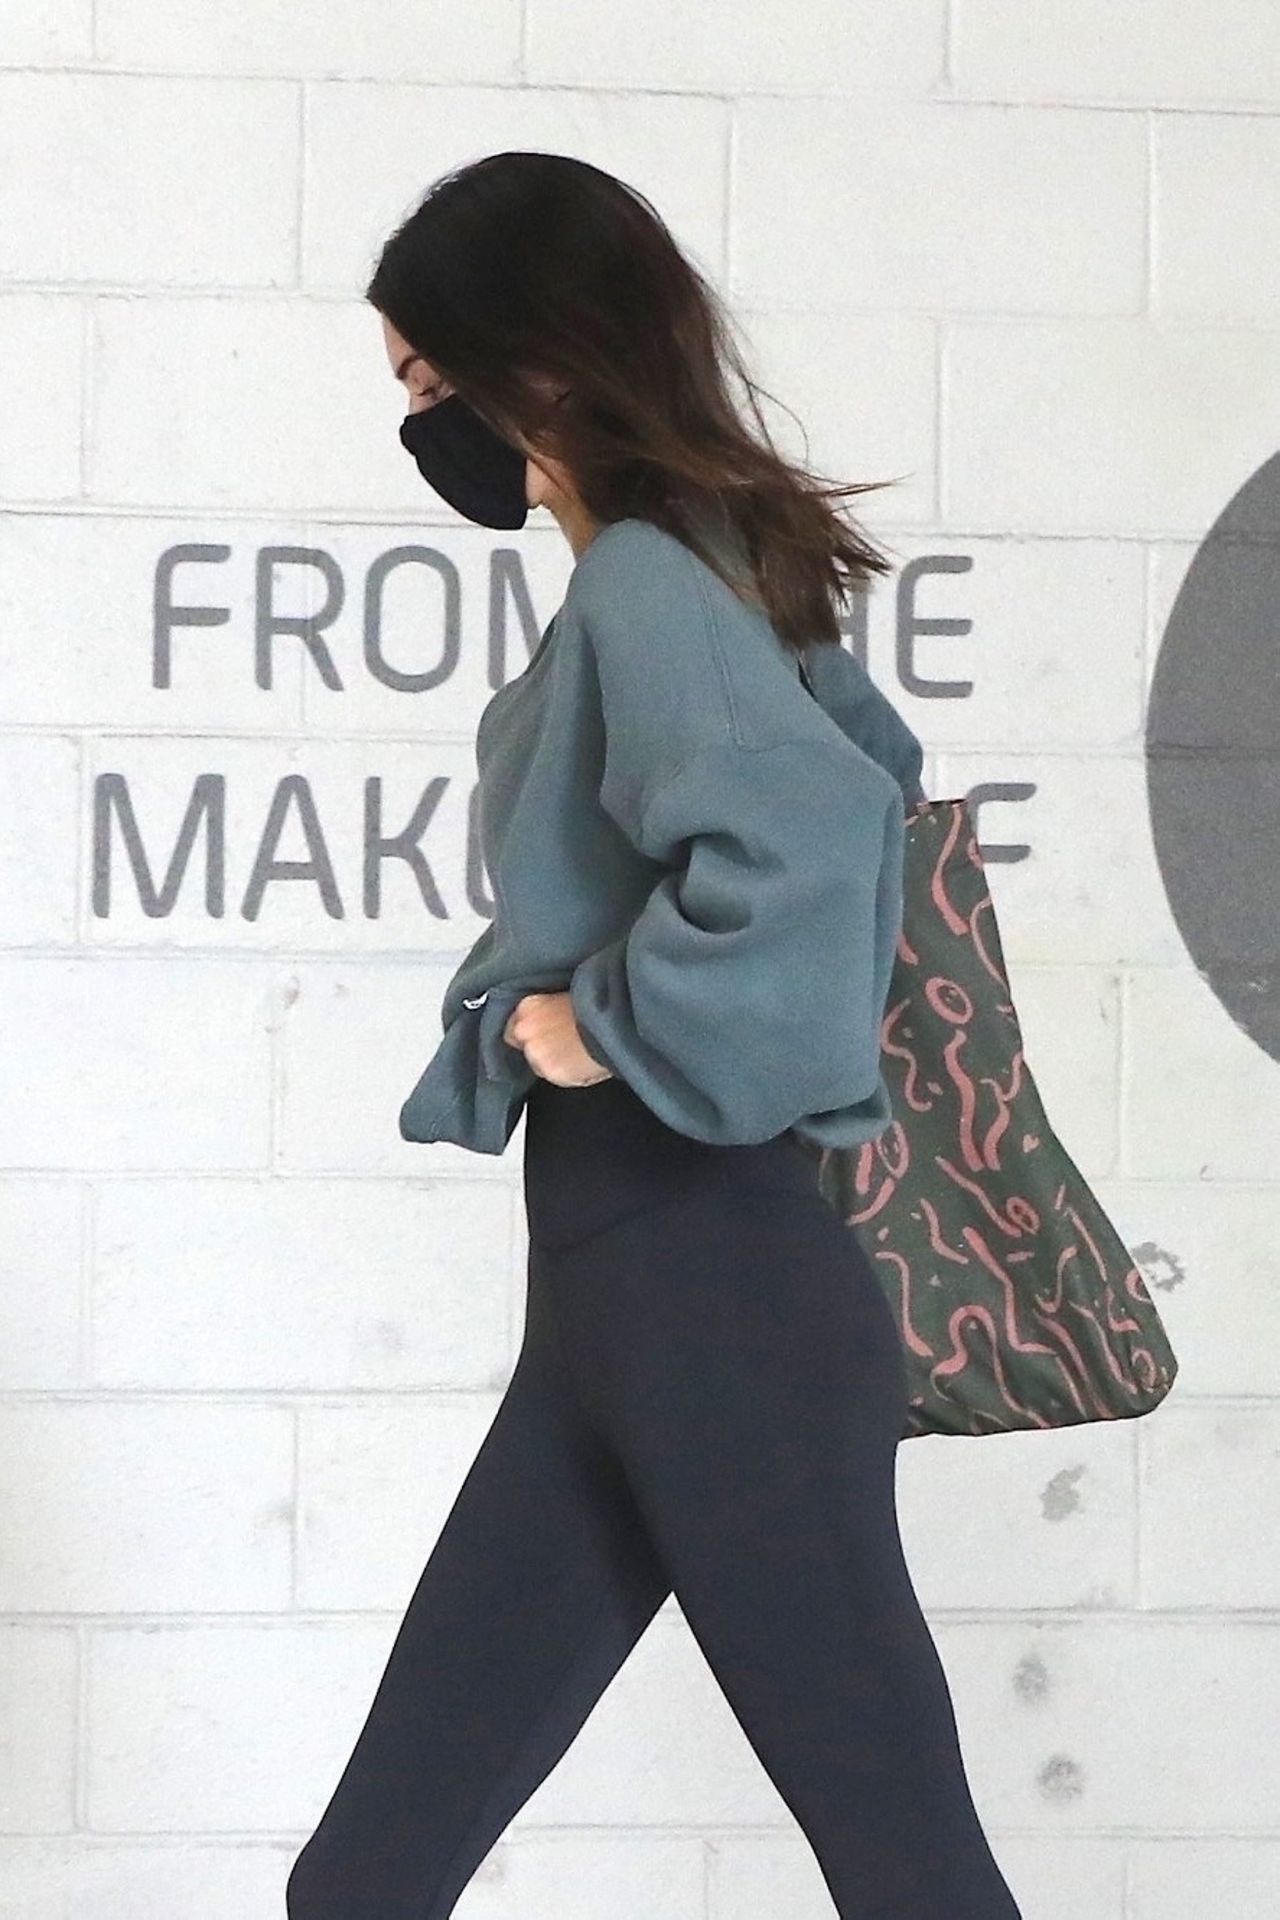 Kendall Jenner in Leggings - West Hollywood 03/19/2021